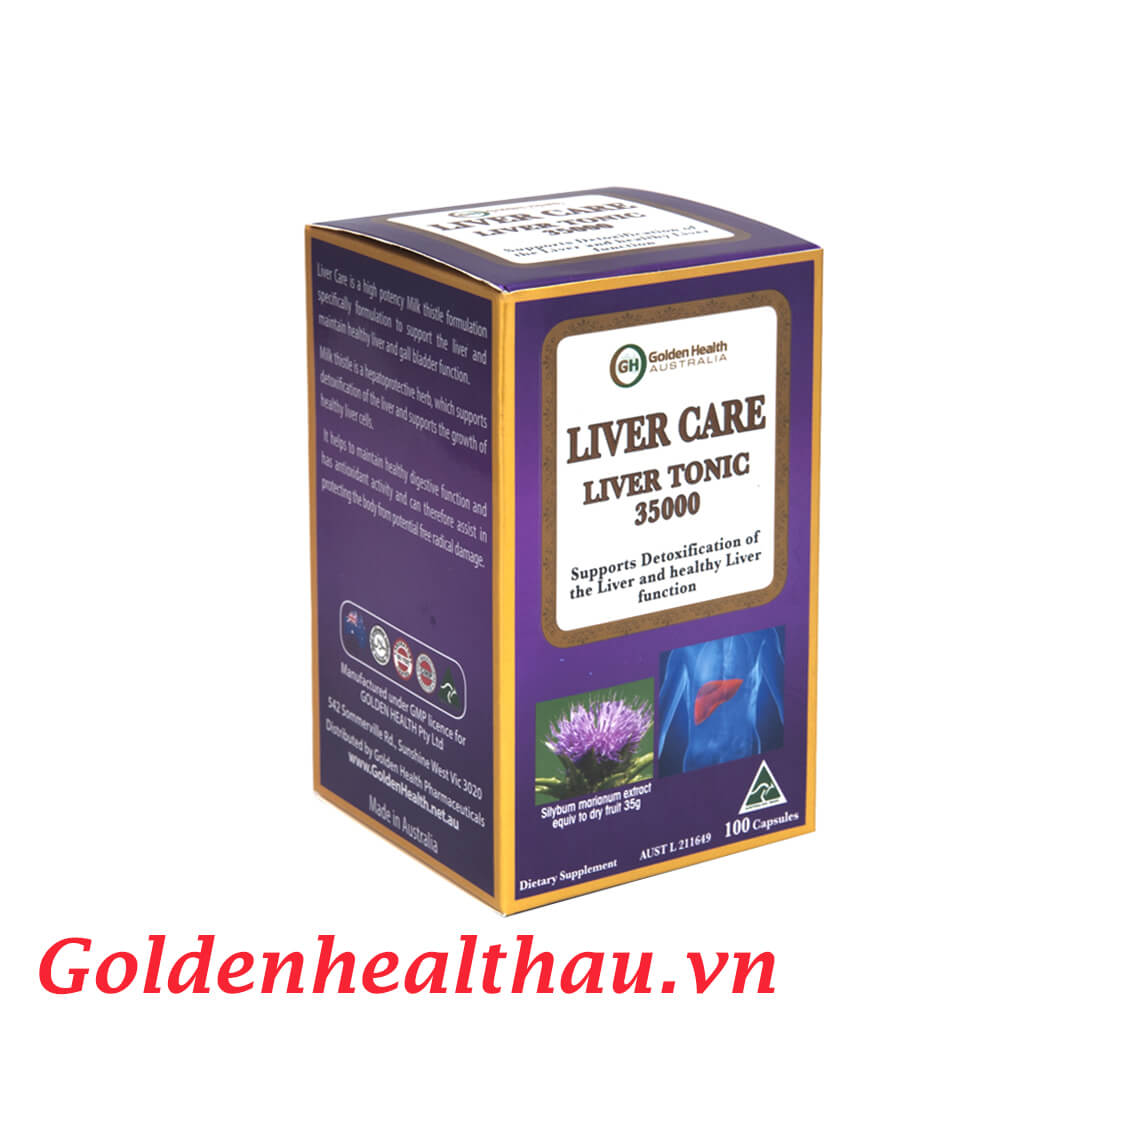 Liver Care Live Tonic 35000mg